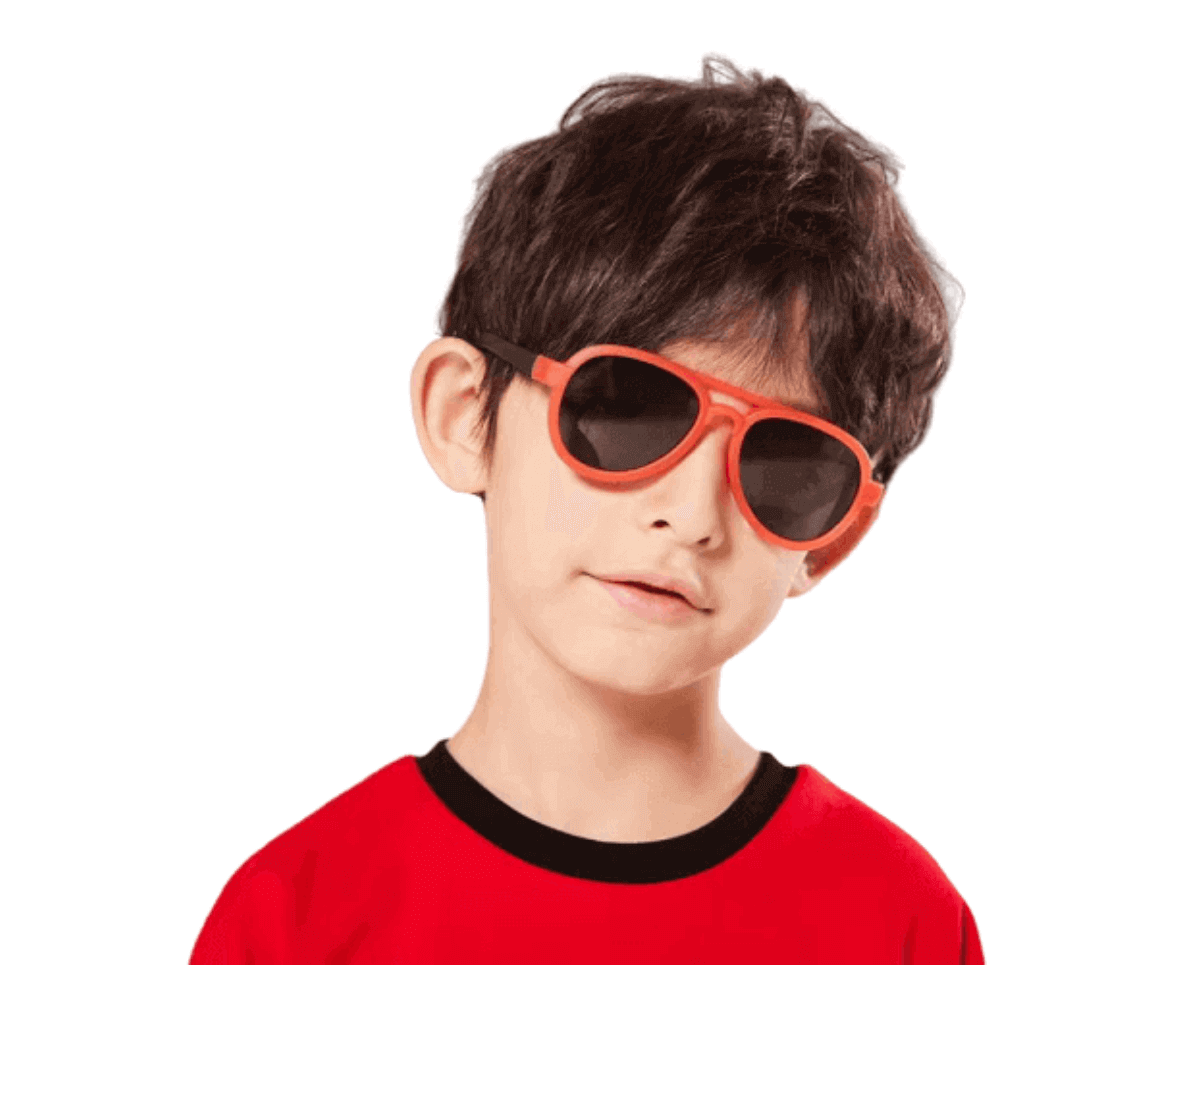 Sunglasses Supplier - China Sunglasses Manufacturer_kids sunglasses